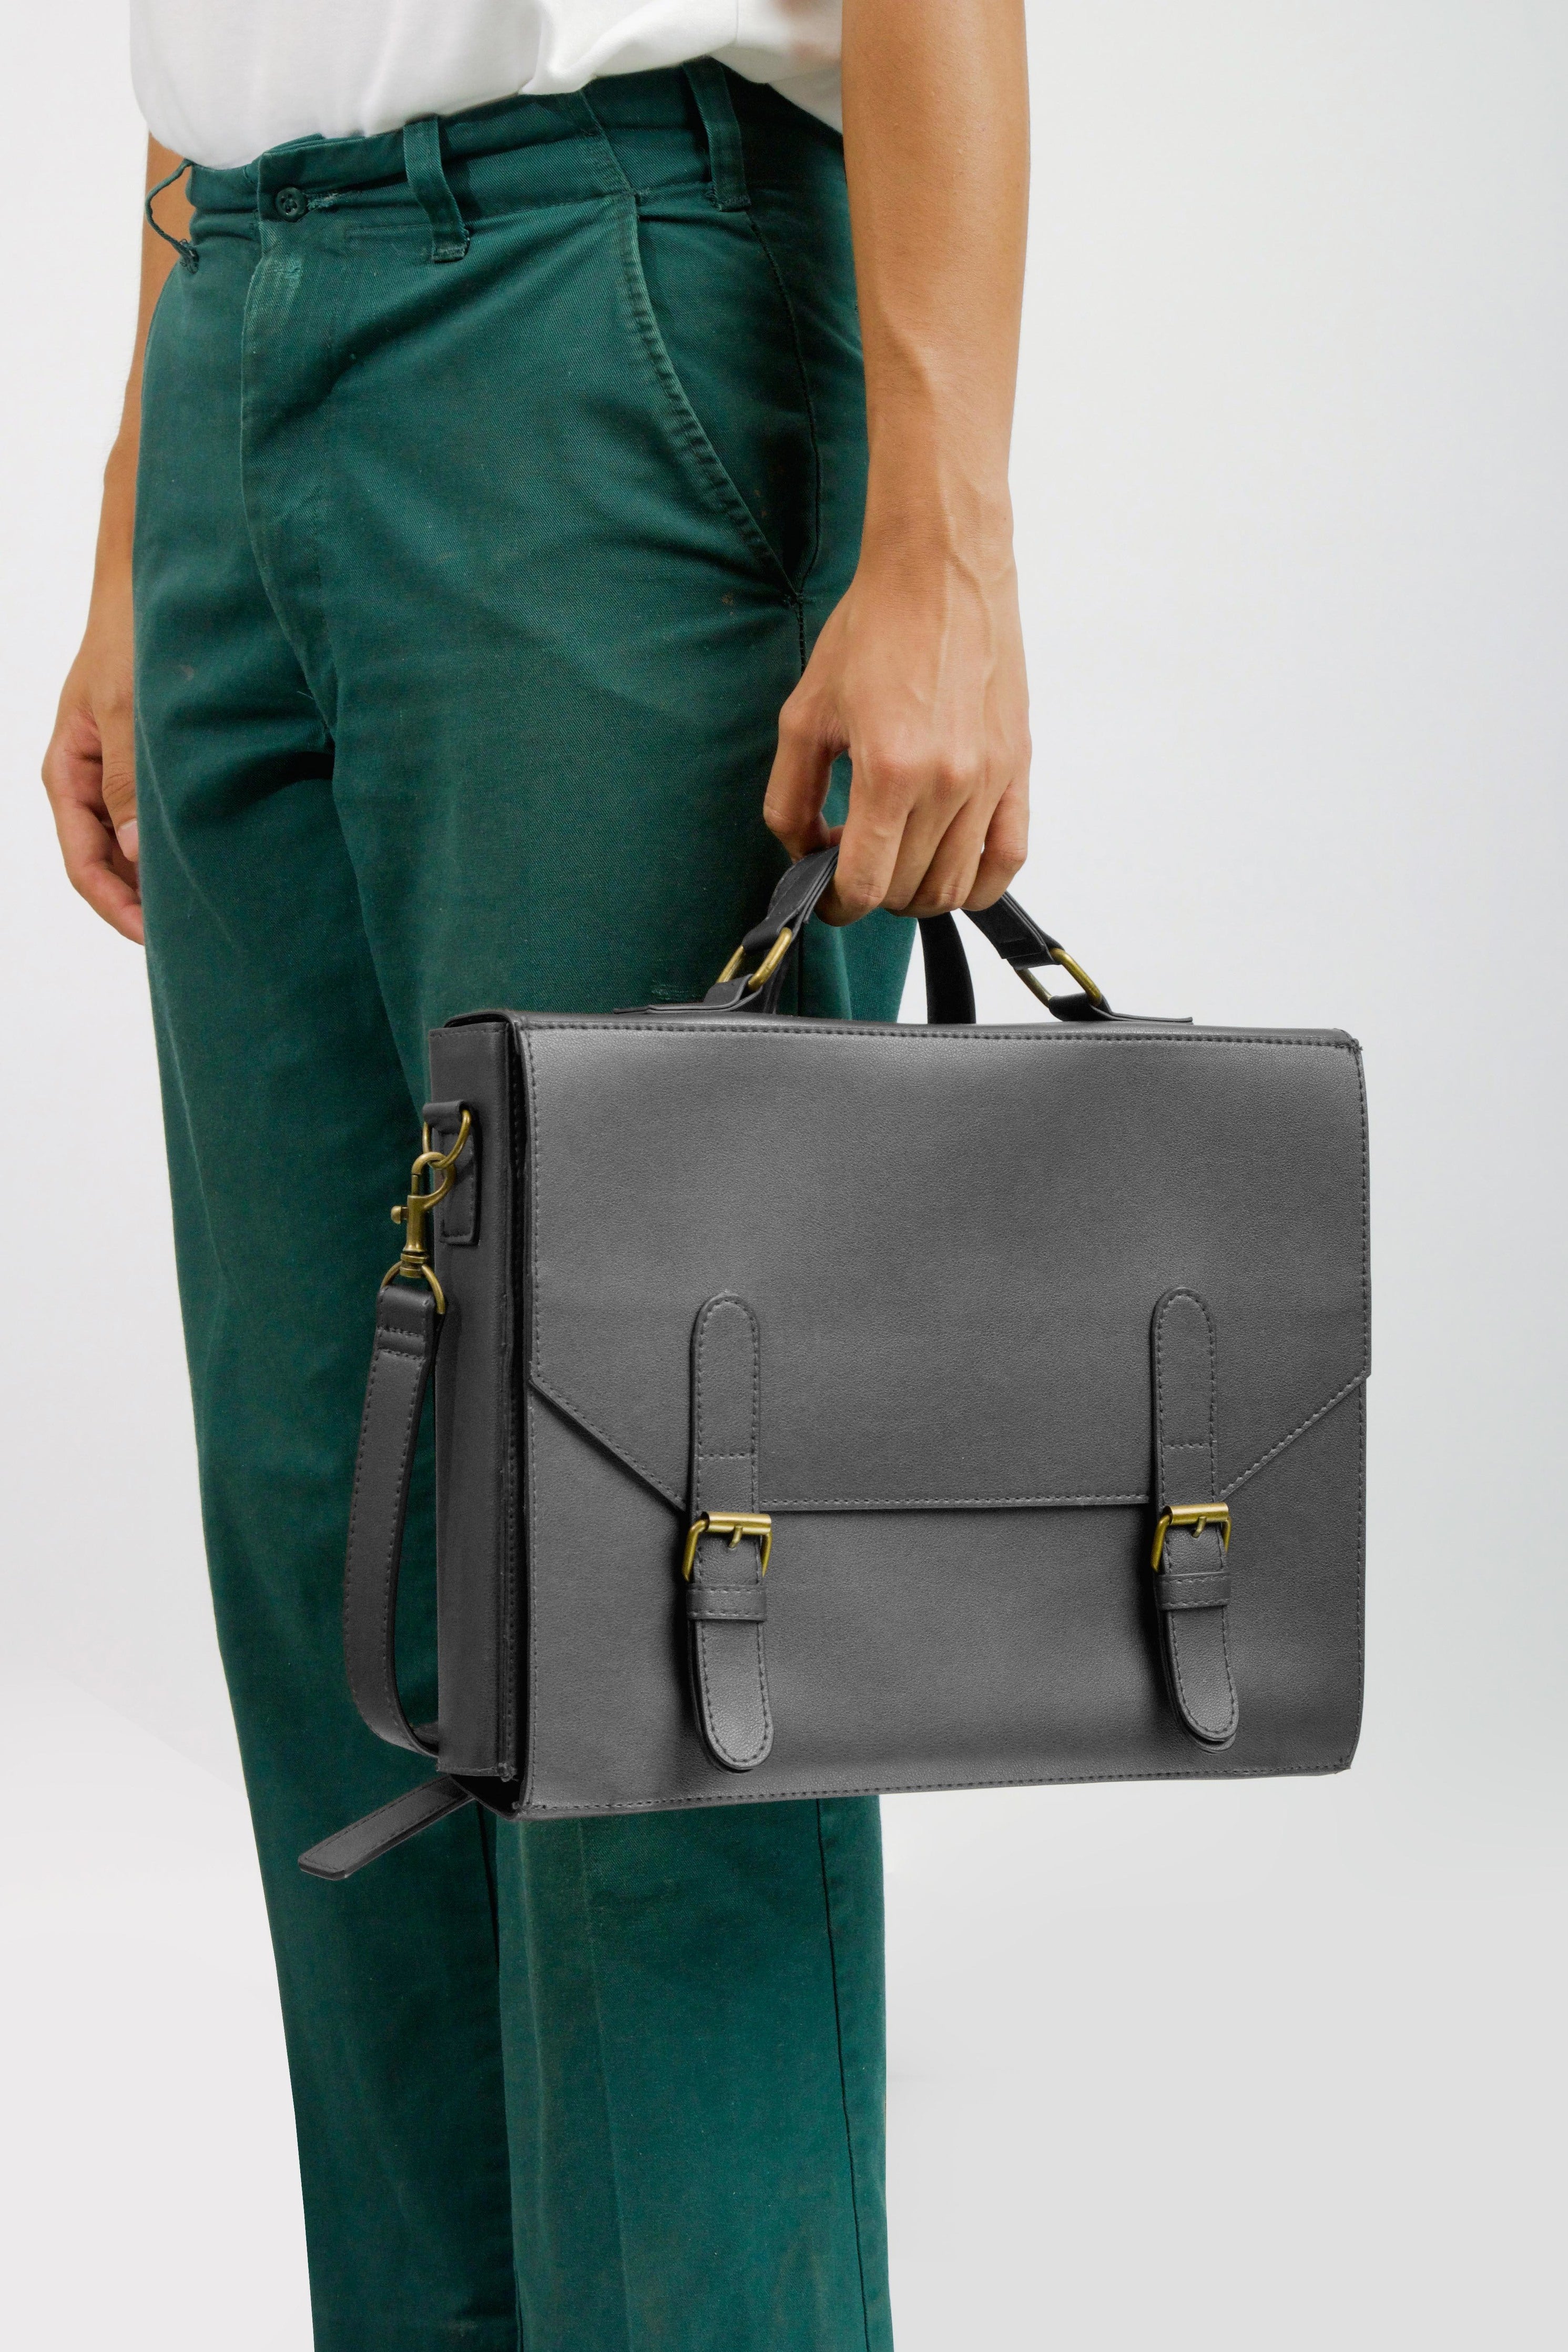 The Essential in Black | Hisa Yumi Workspace Luxury Bags